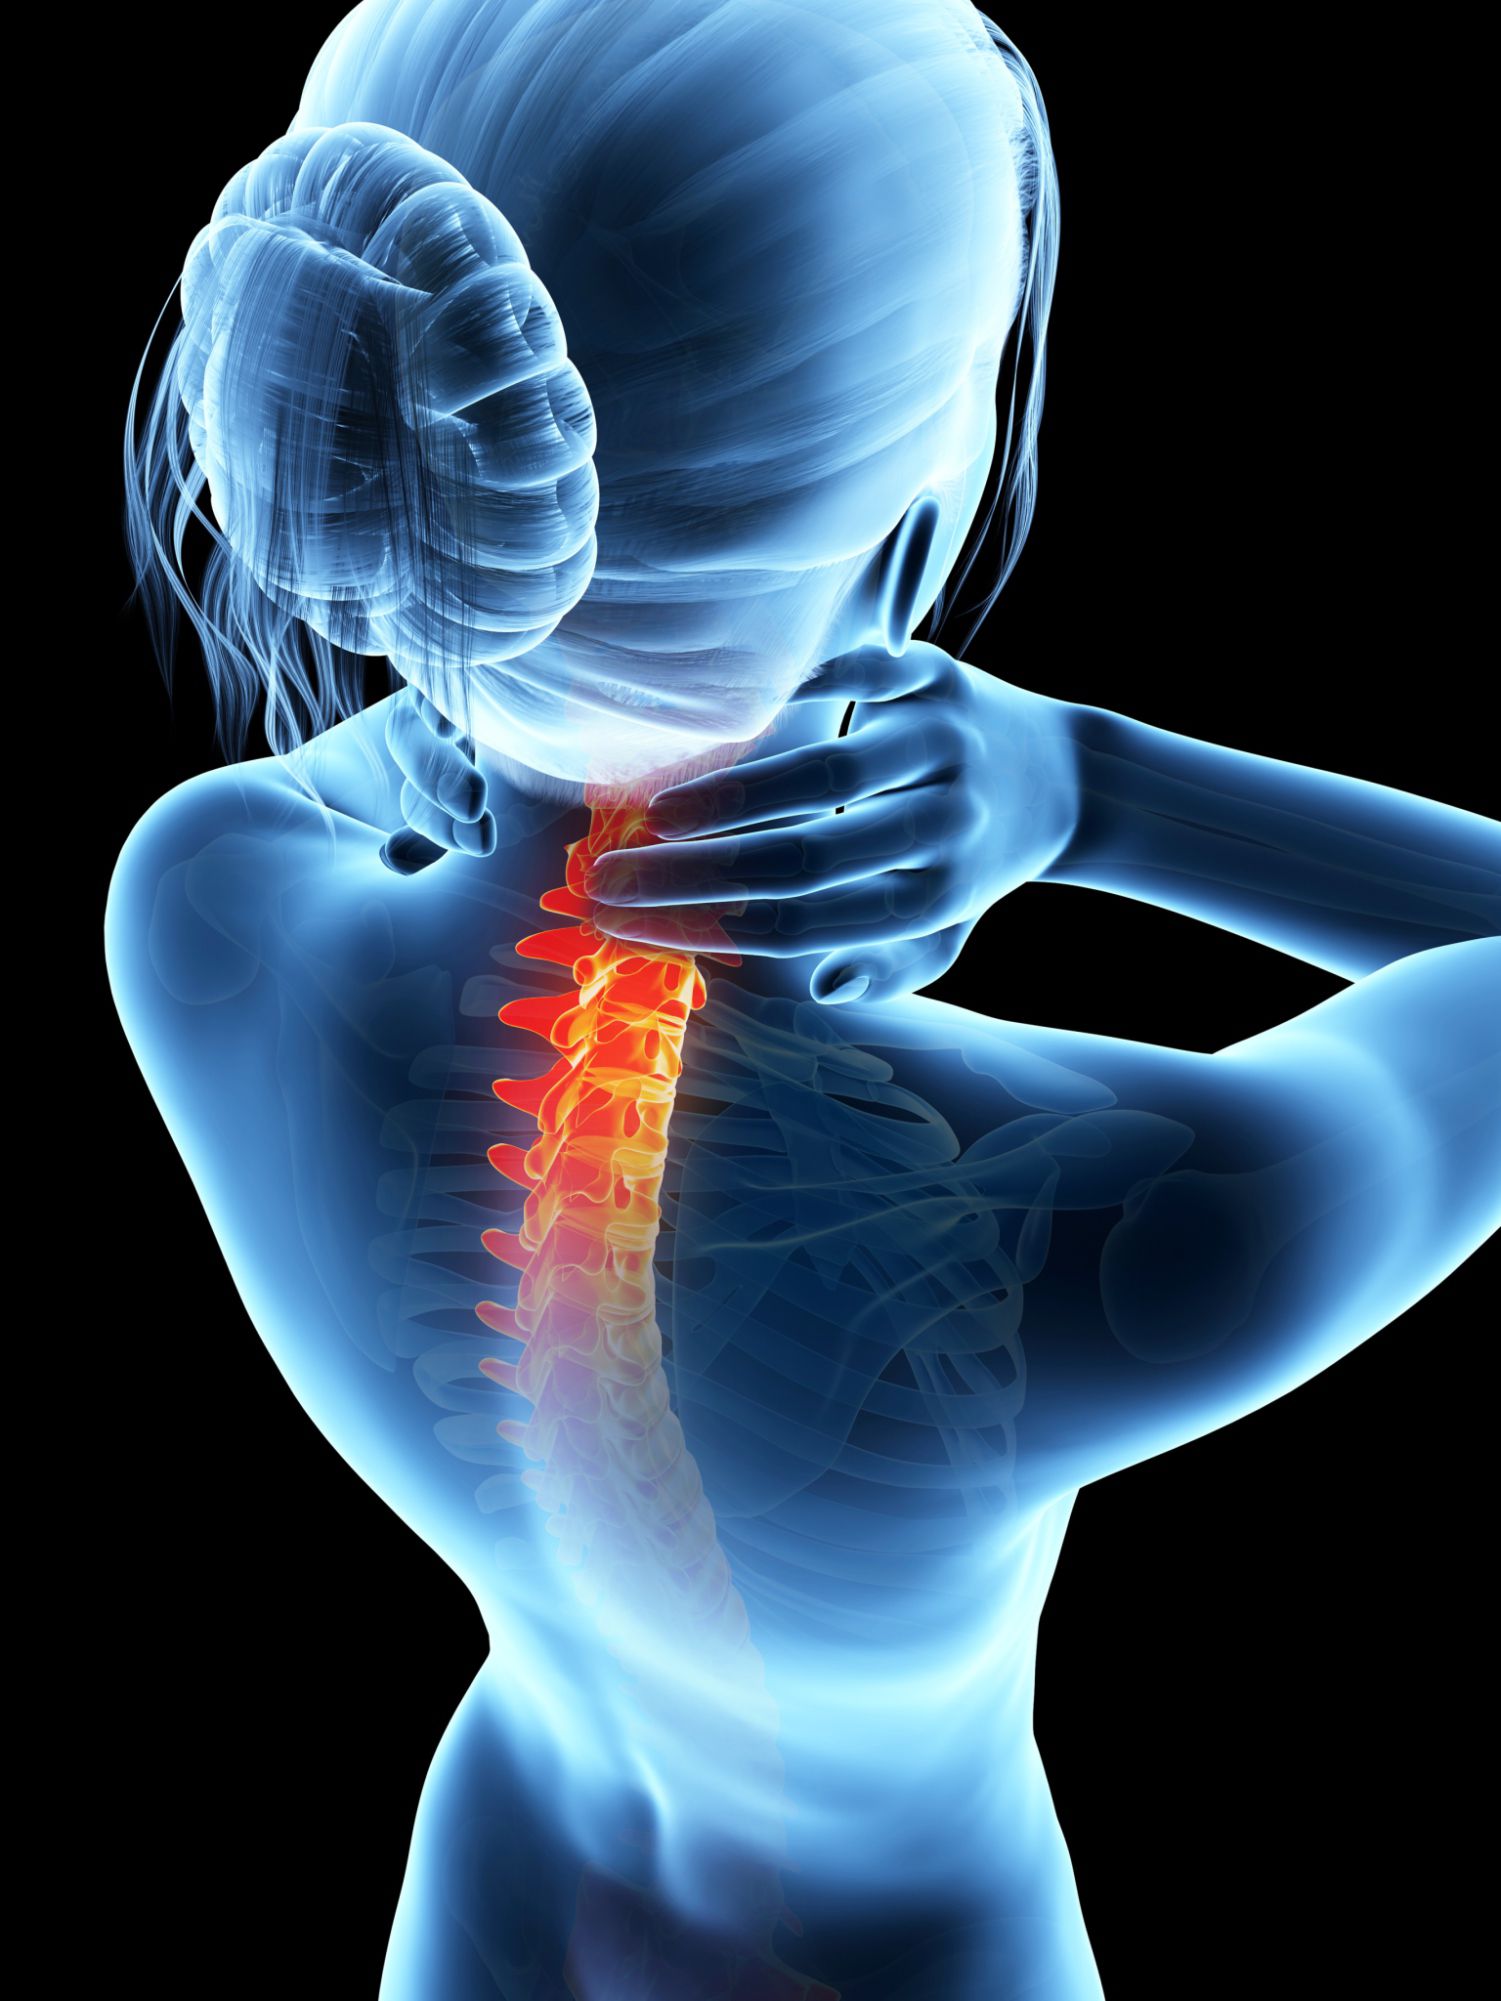 Can Rheumatoid Arthritis Affect the Spine?